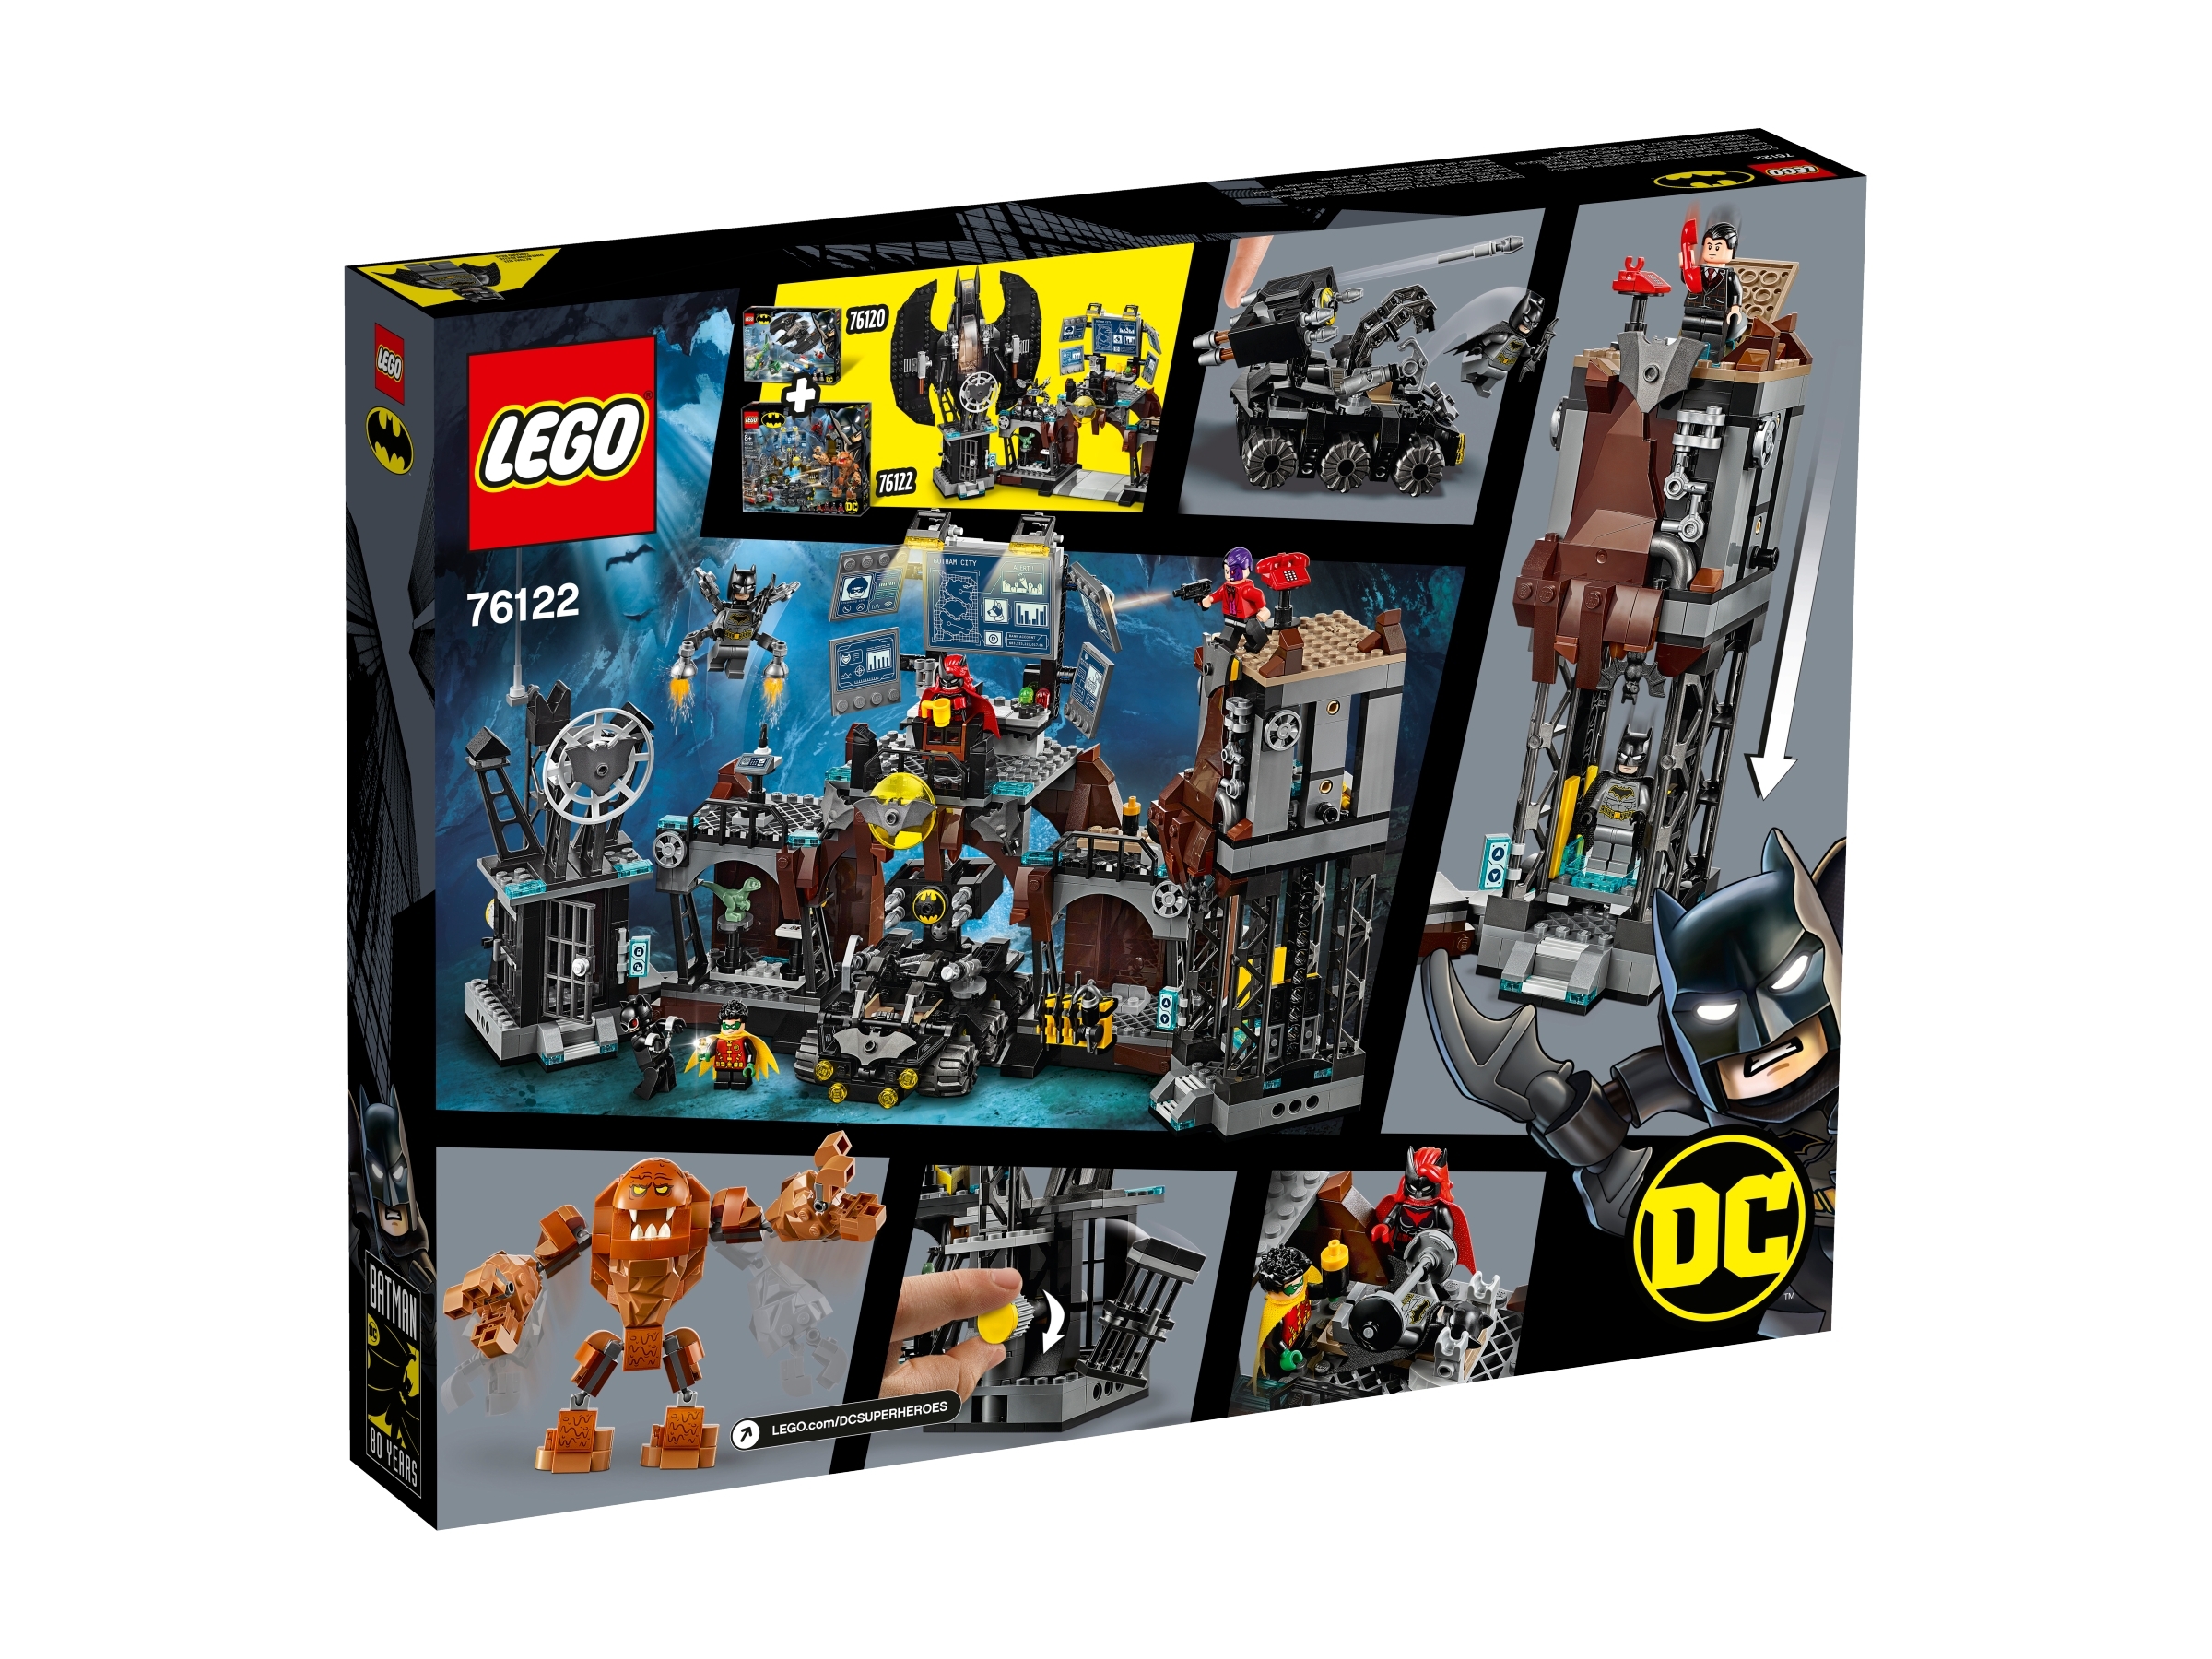 Lego Batman Clayface Minifigure